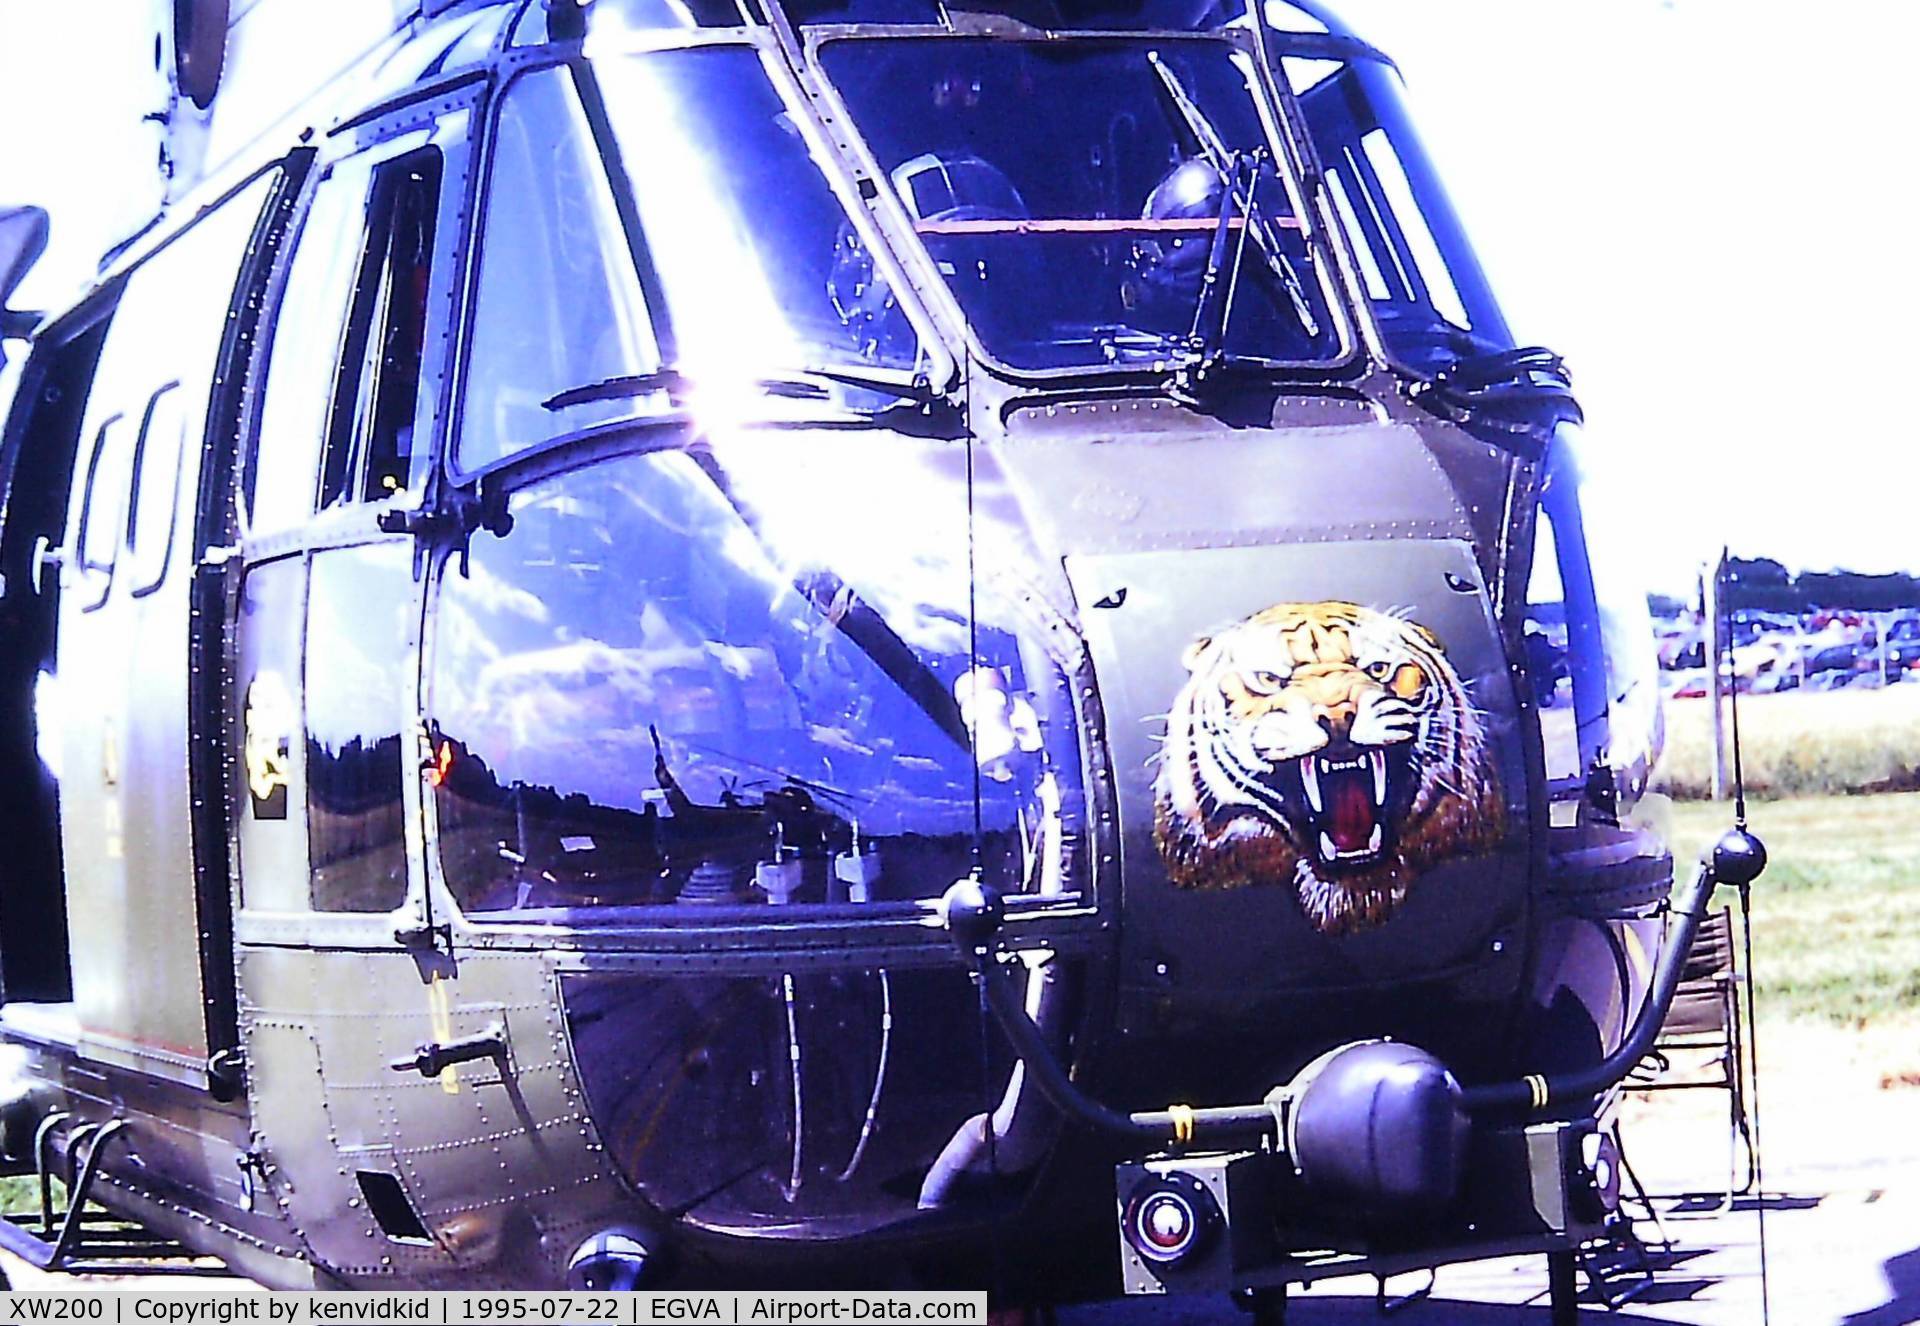 XW200, 1971 Westland Puma HC.1 C/N 1048/F9747, At the 1995 Fairford International Air Tattoo, scanned from slide.